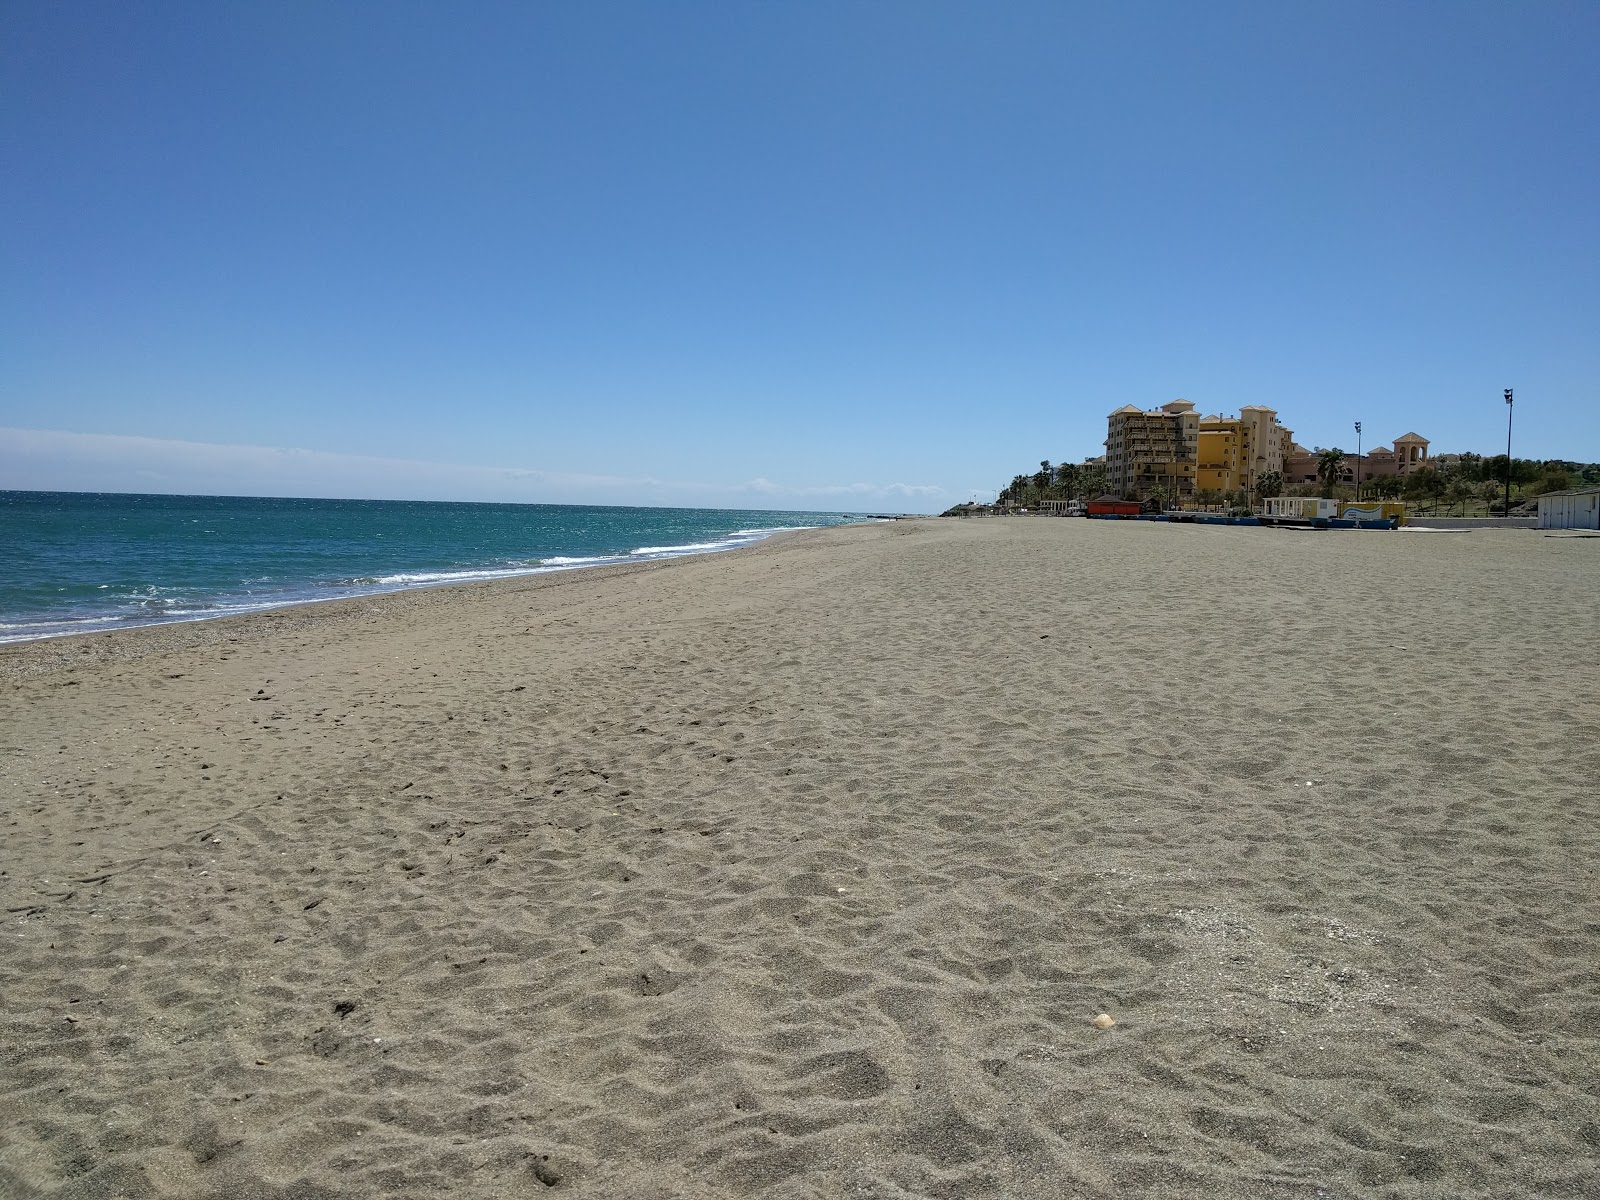 Foto di Playa del Castillo Sohail con una superficie del sabbia grigia